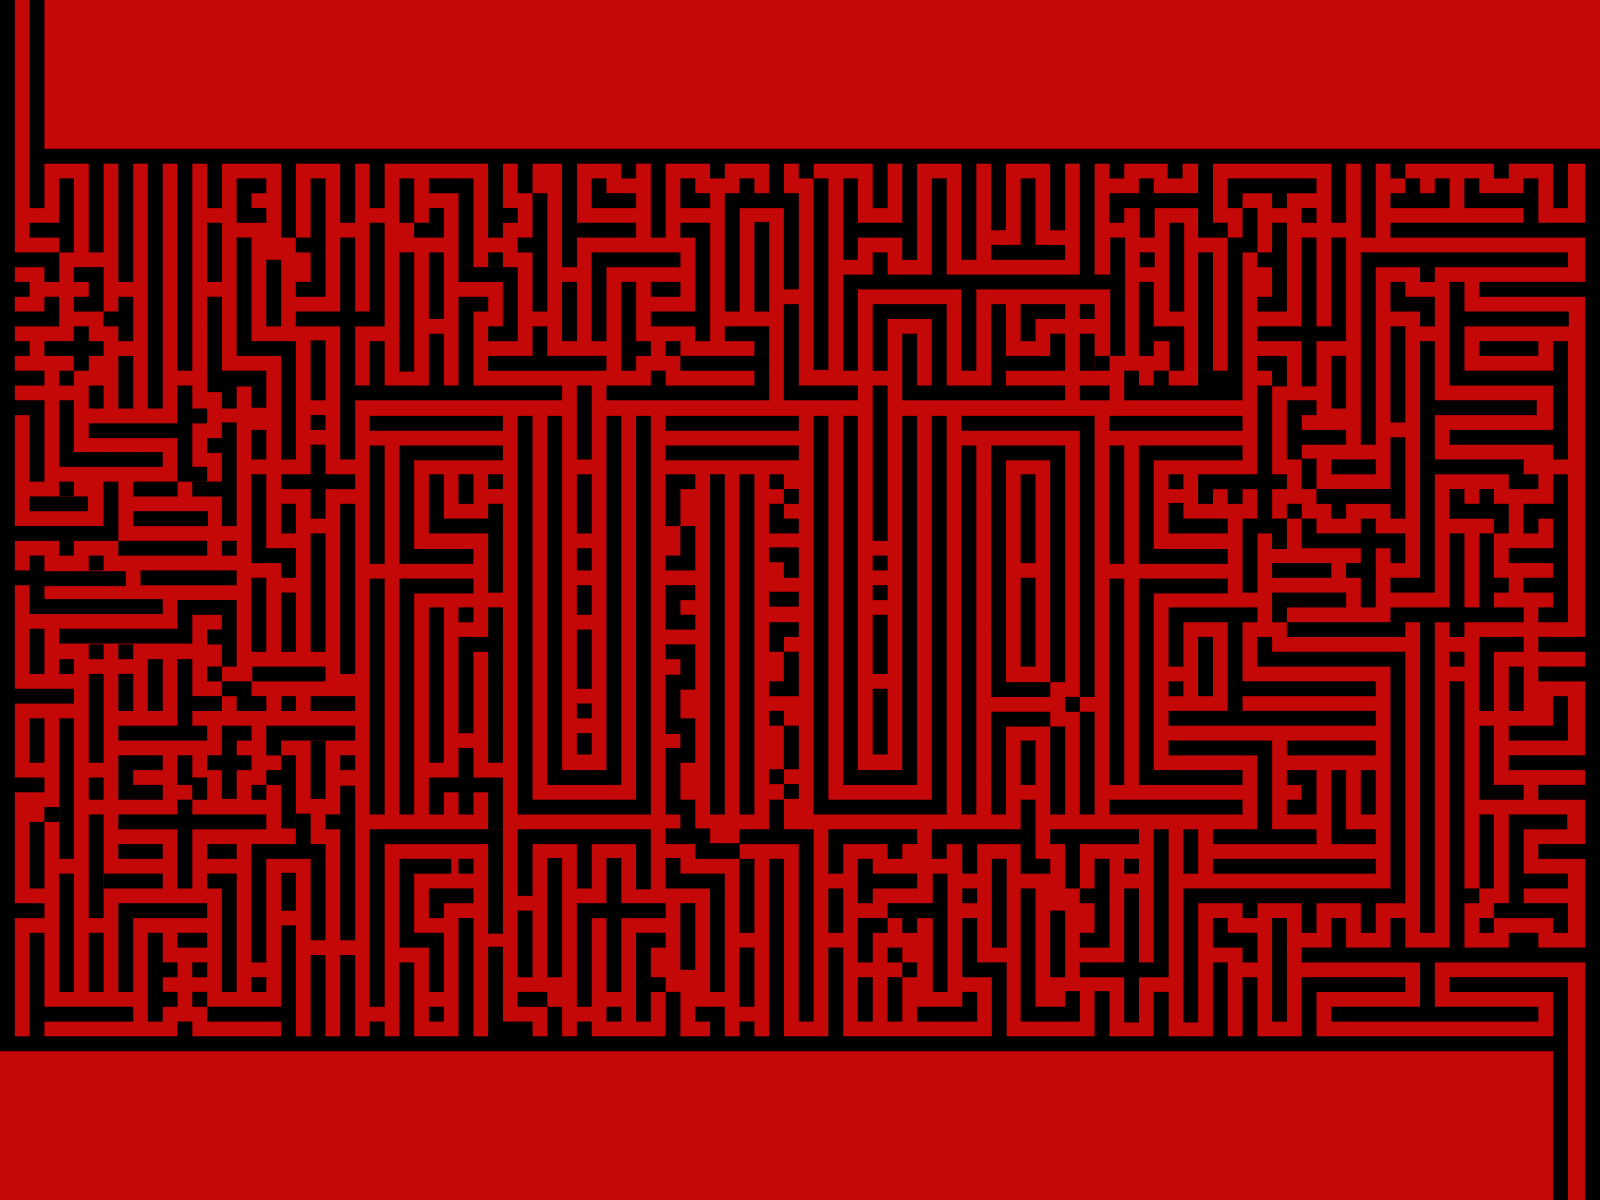 Future is complicated complicated covid 19 future lines maze